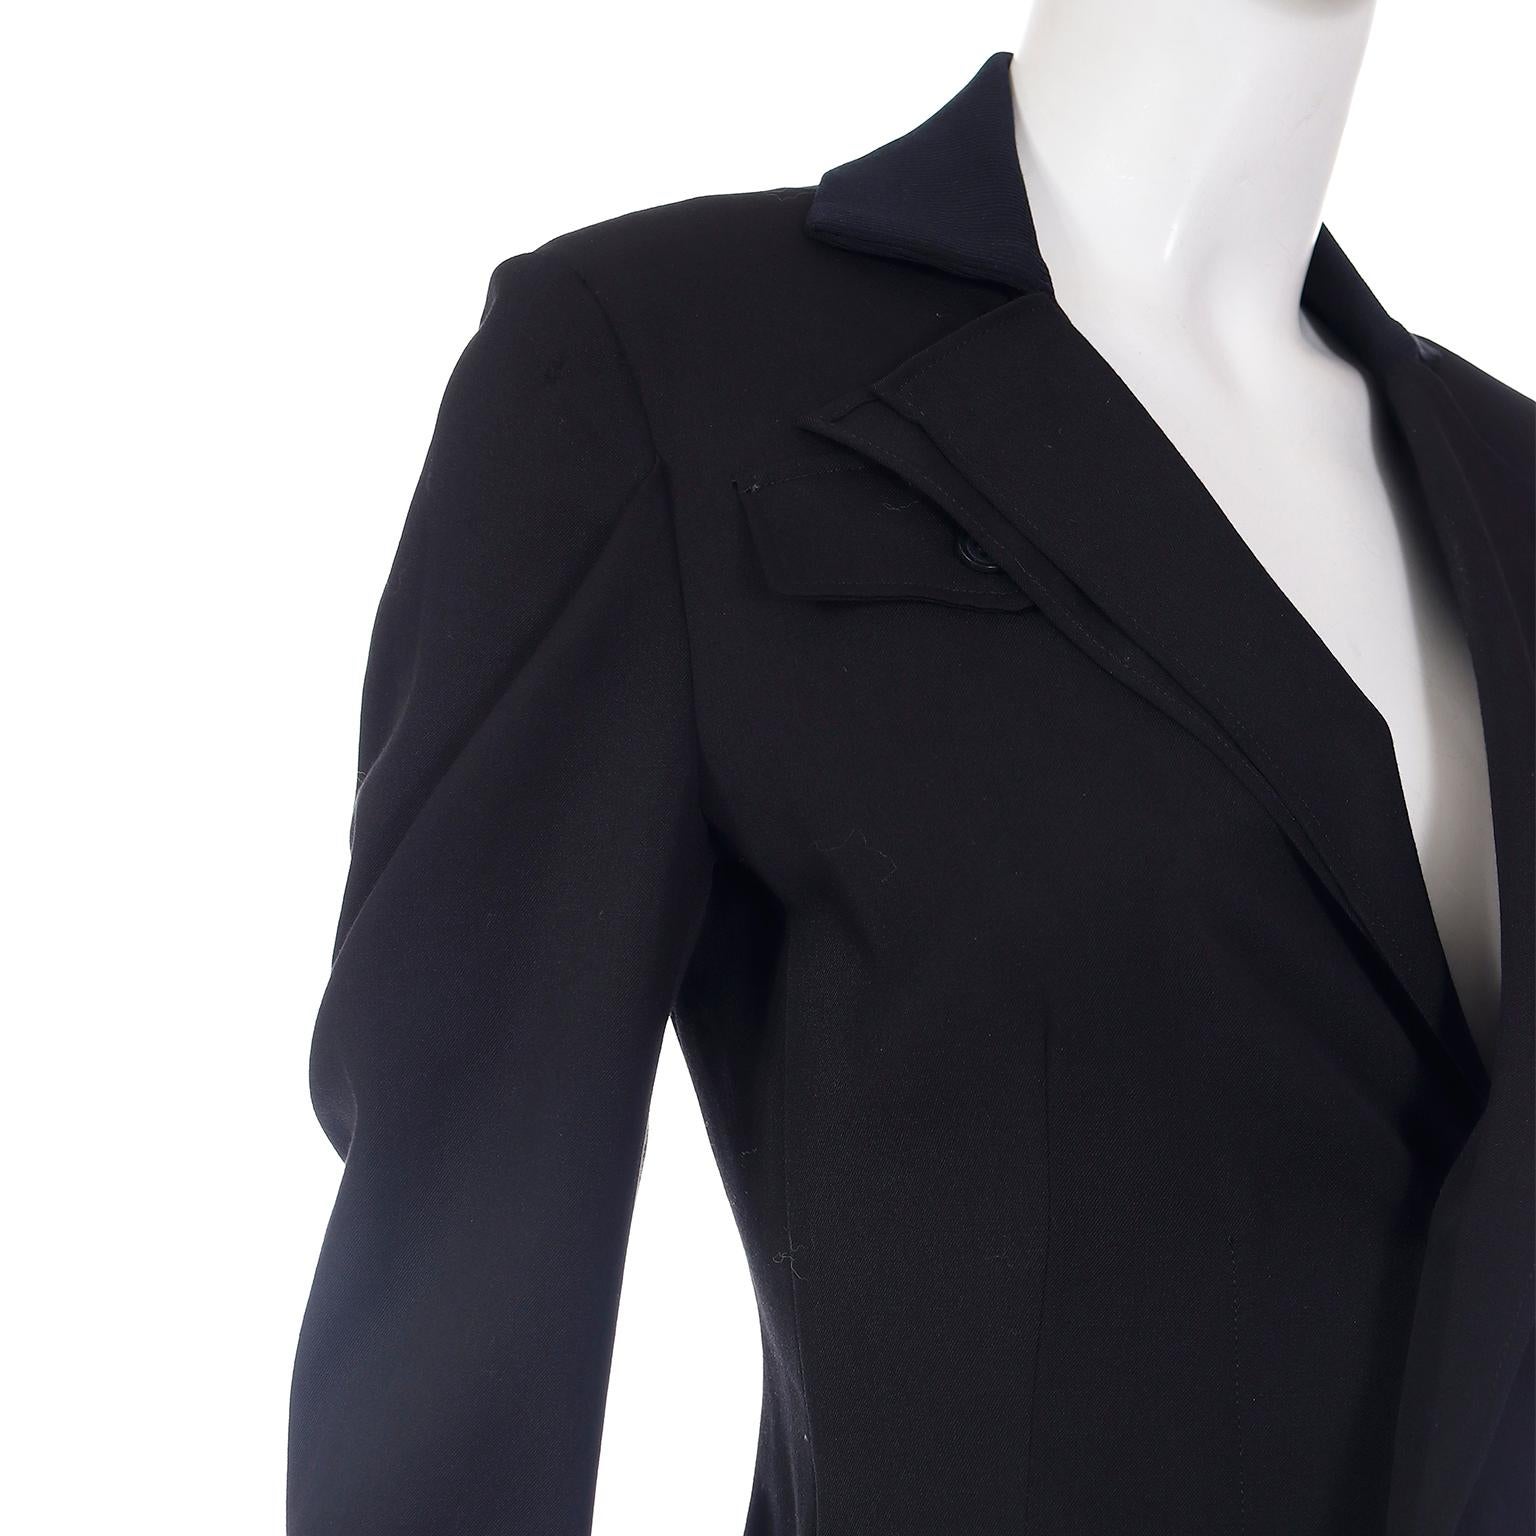 Yohji Yamamoto Black Wool Tuxedo Style Jacket W Zipper Button Holes & Pockets For Sale 2